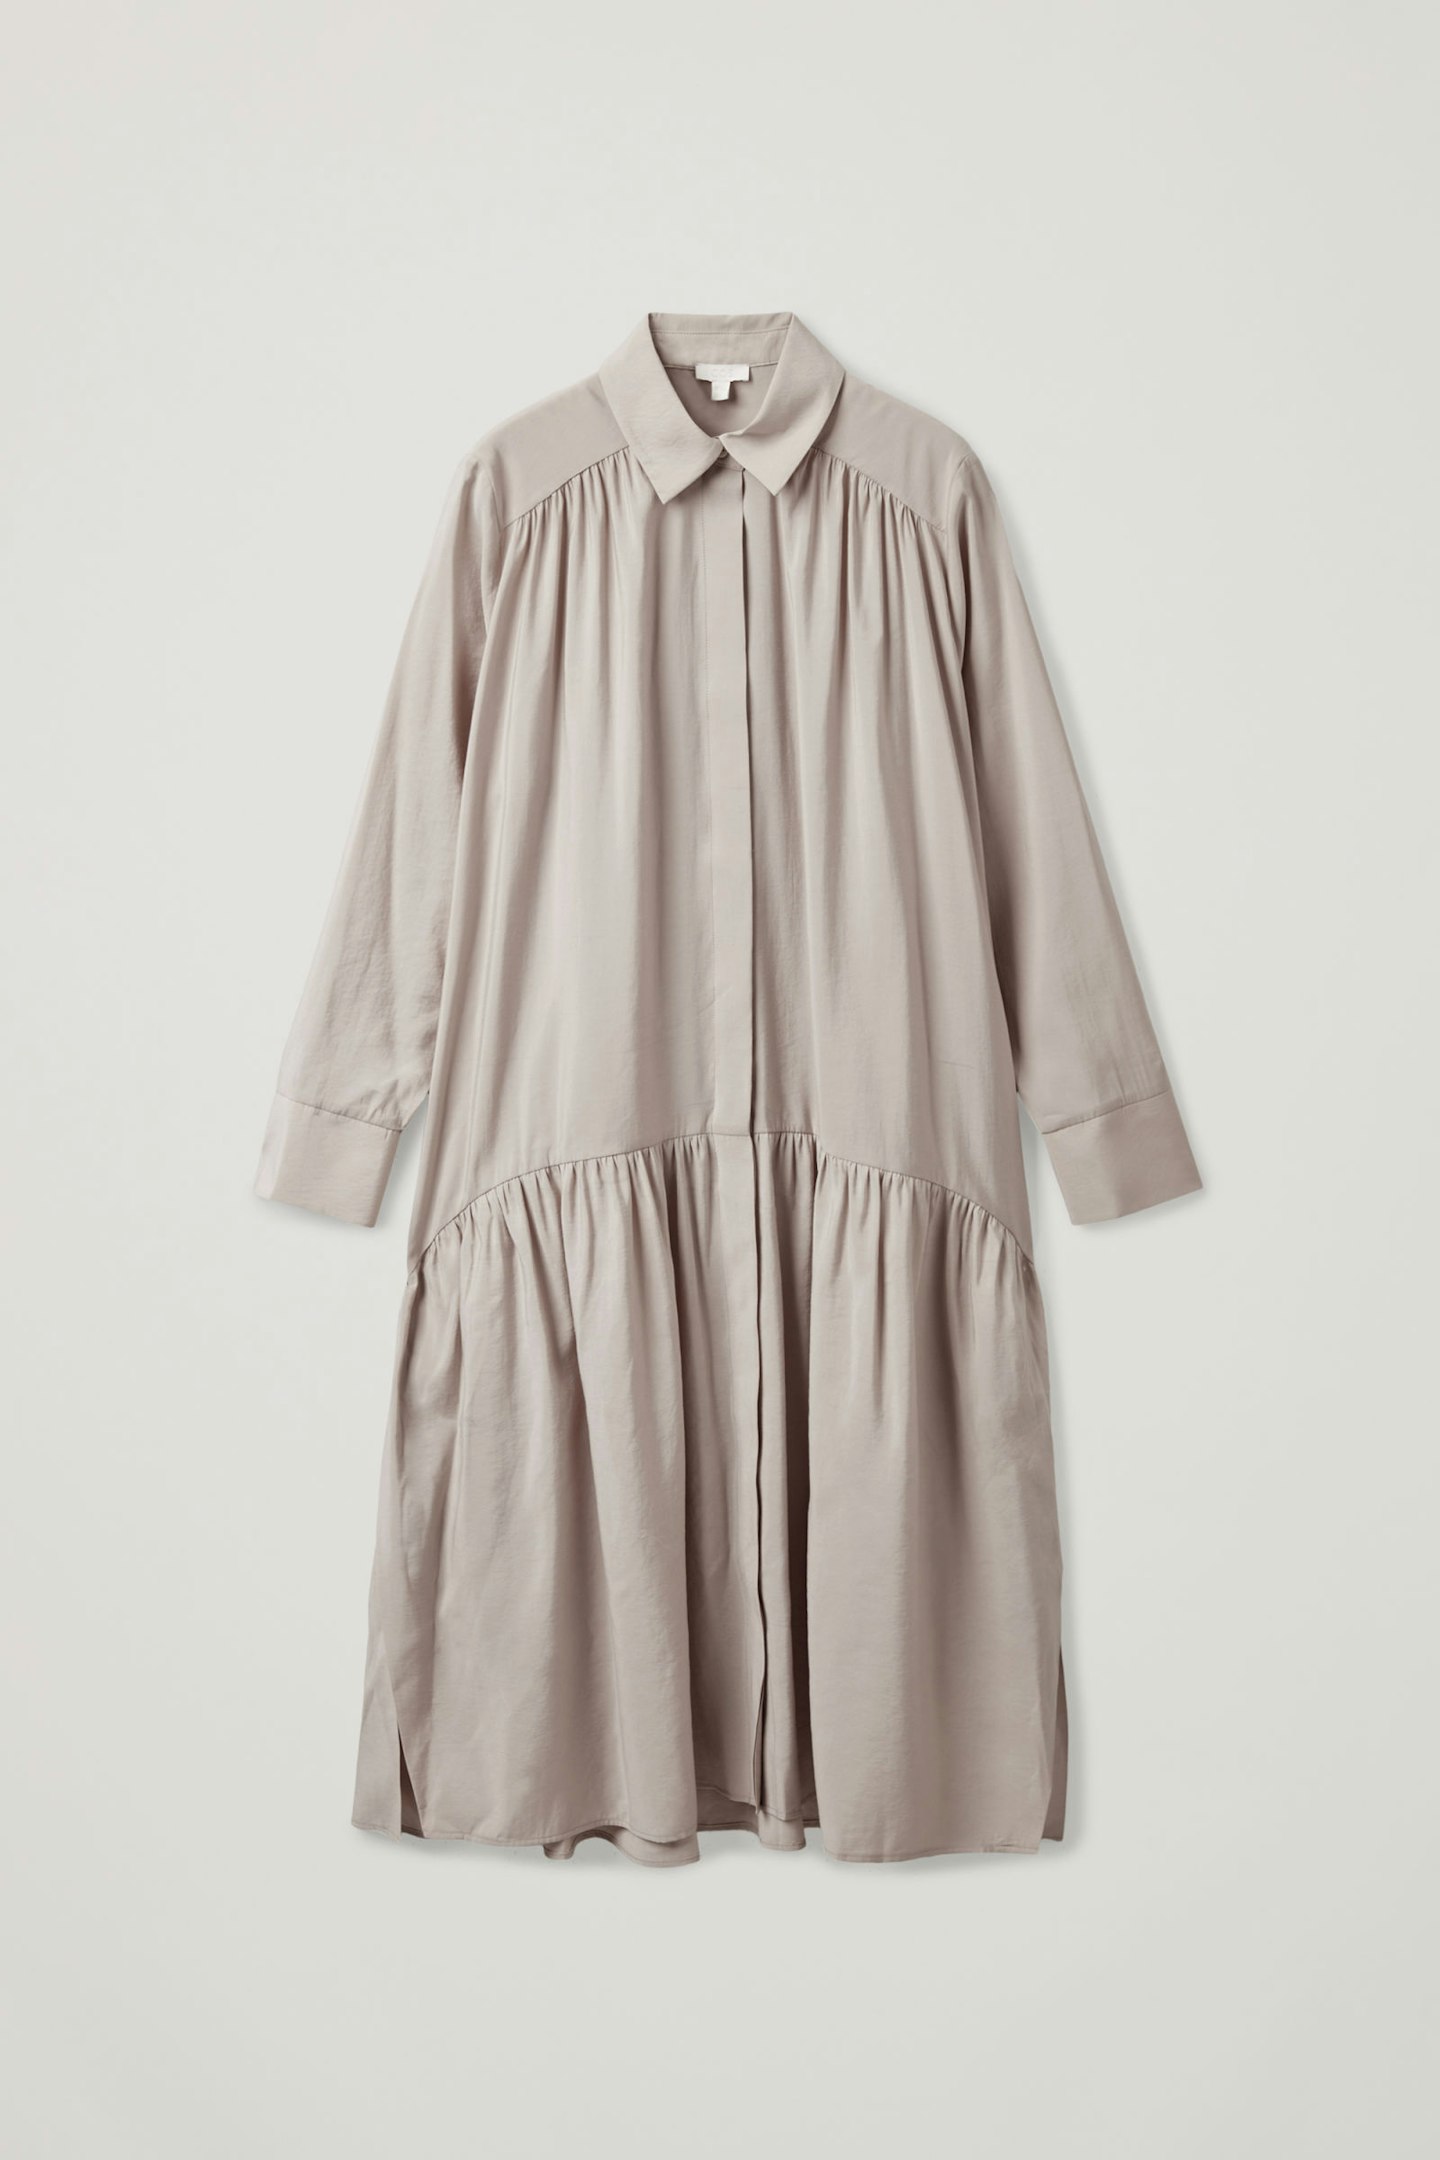 COS, Tiered Midi Shirt Dress, £79